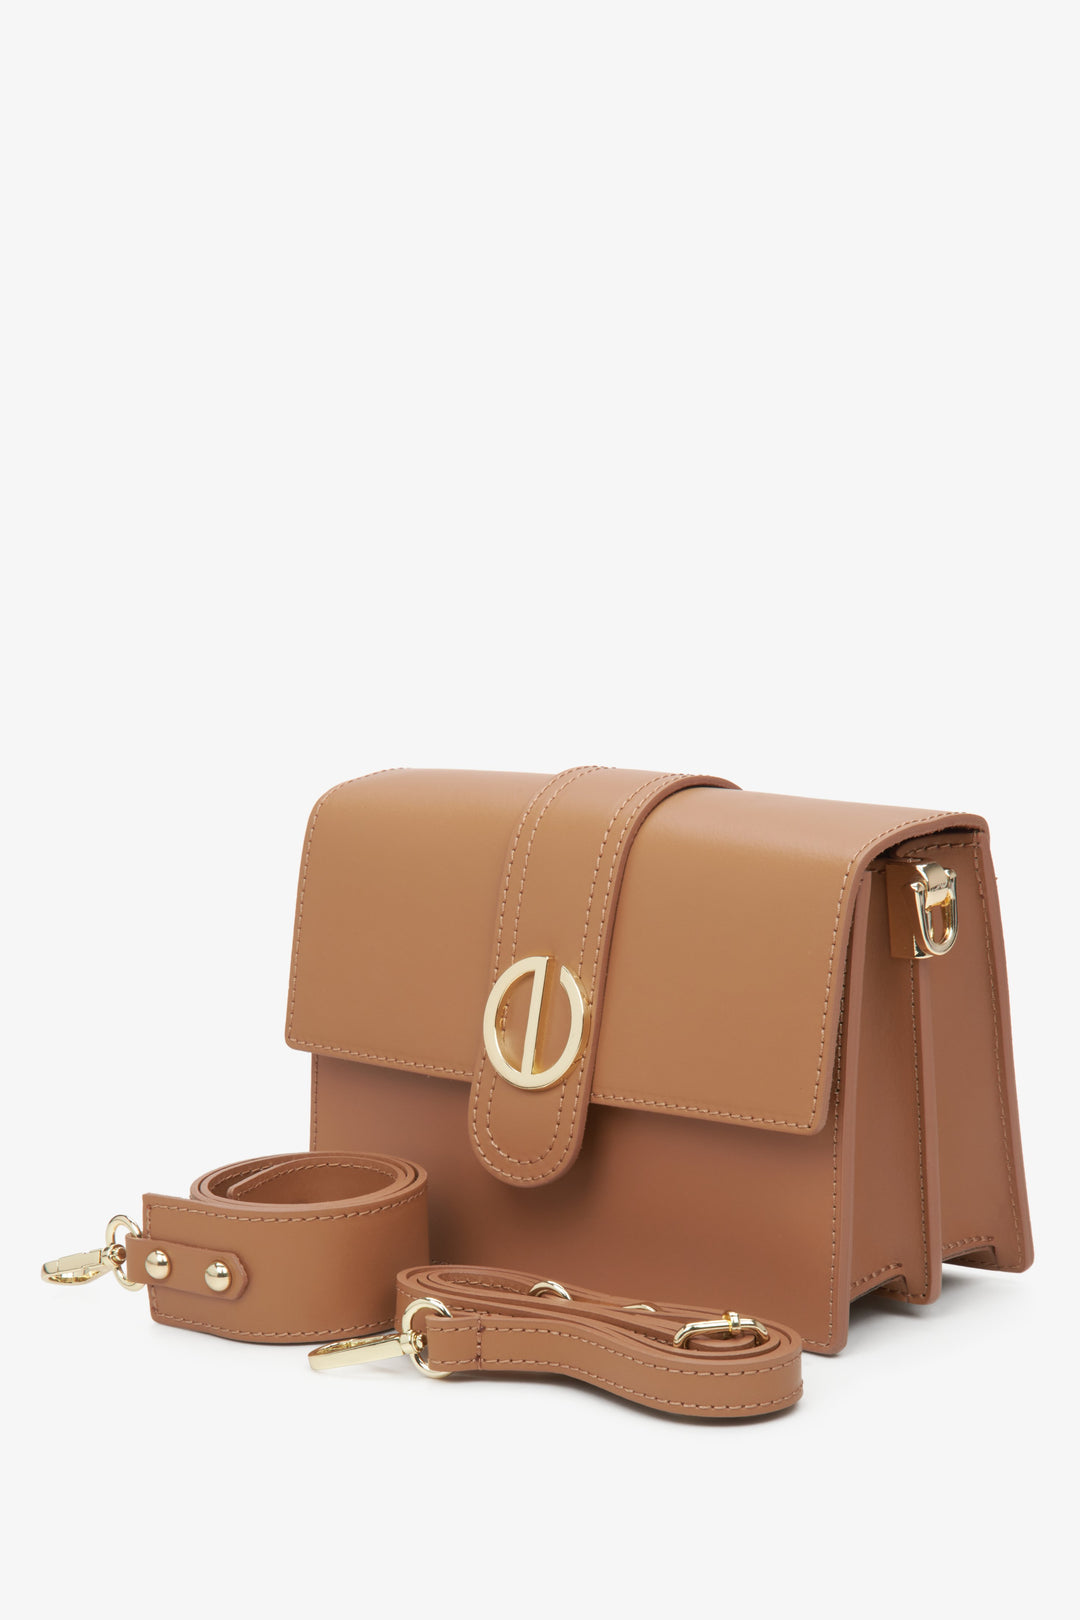 Women's brown handy bag with gold hardware Estro.